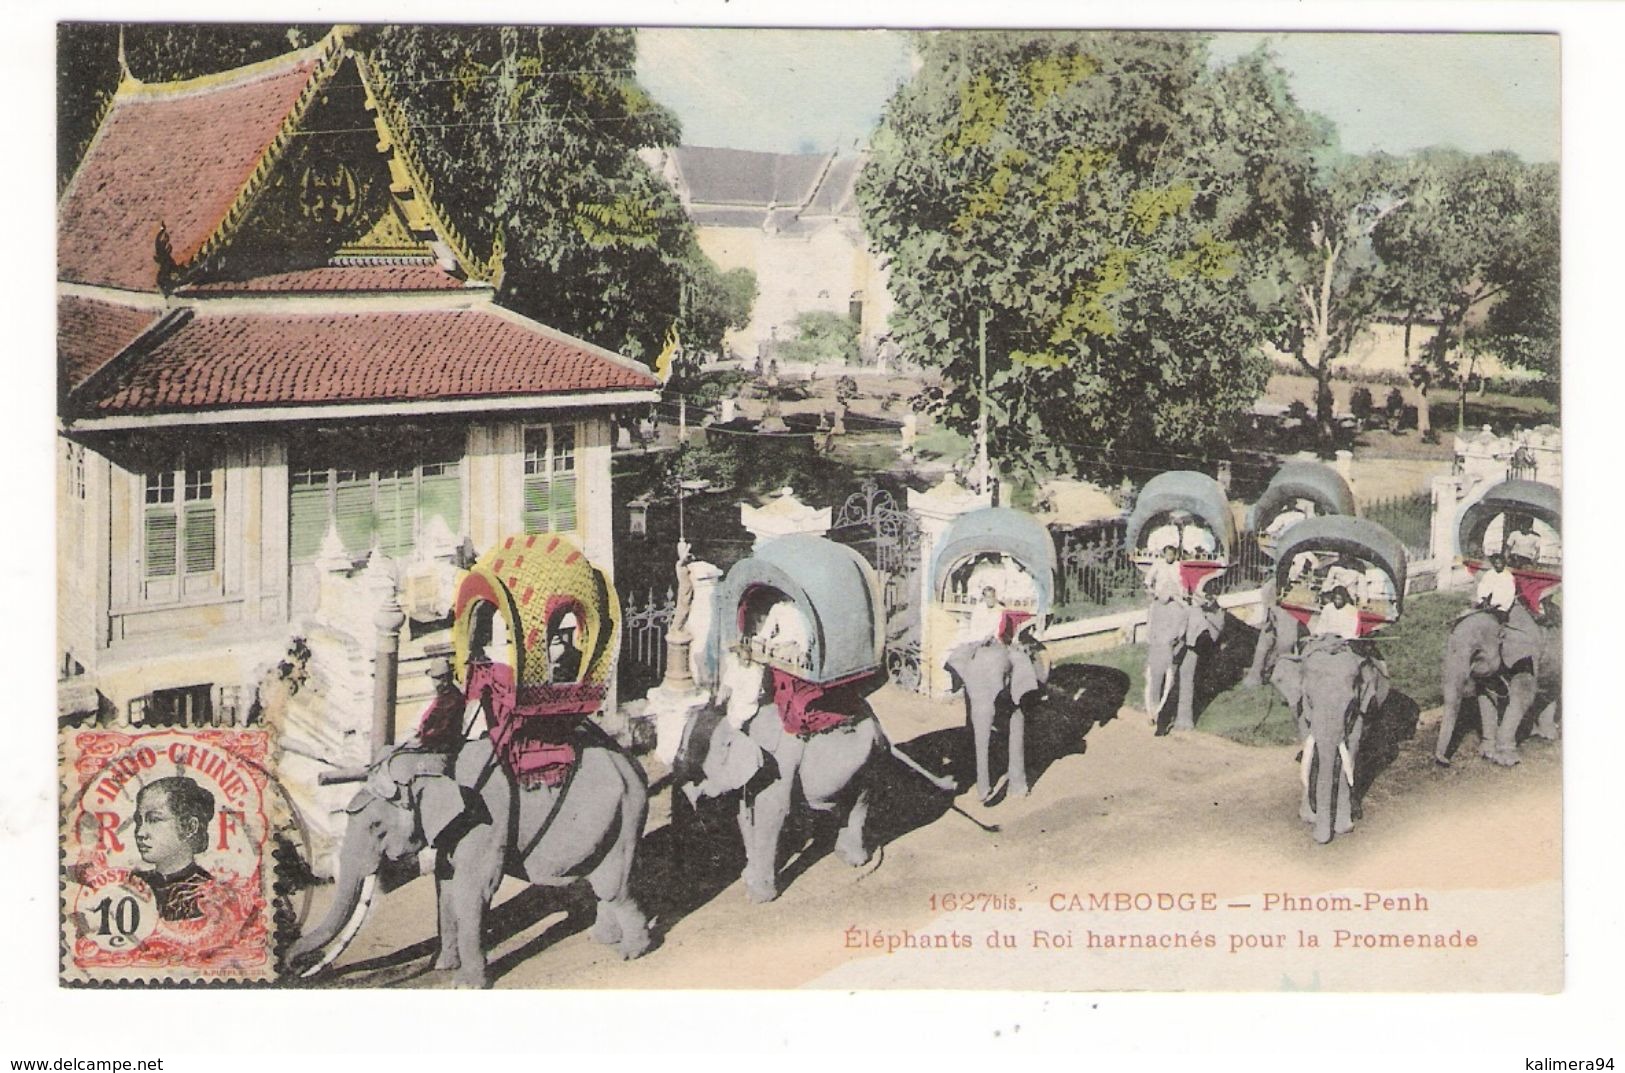 CAMBODGE / PHNOM-PENH / ELEPHANTS DU ROI HARNACHES POUR LA PROMENADE / Edit. DIEULEFILS N° 1627 Bis - Cambodge